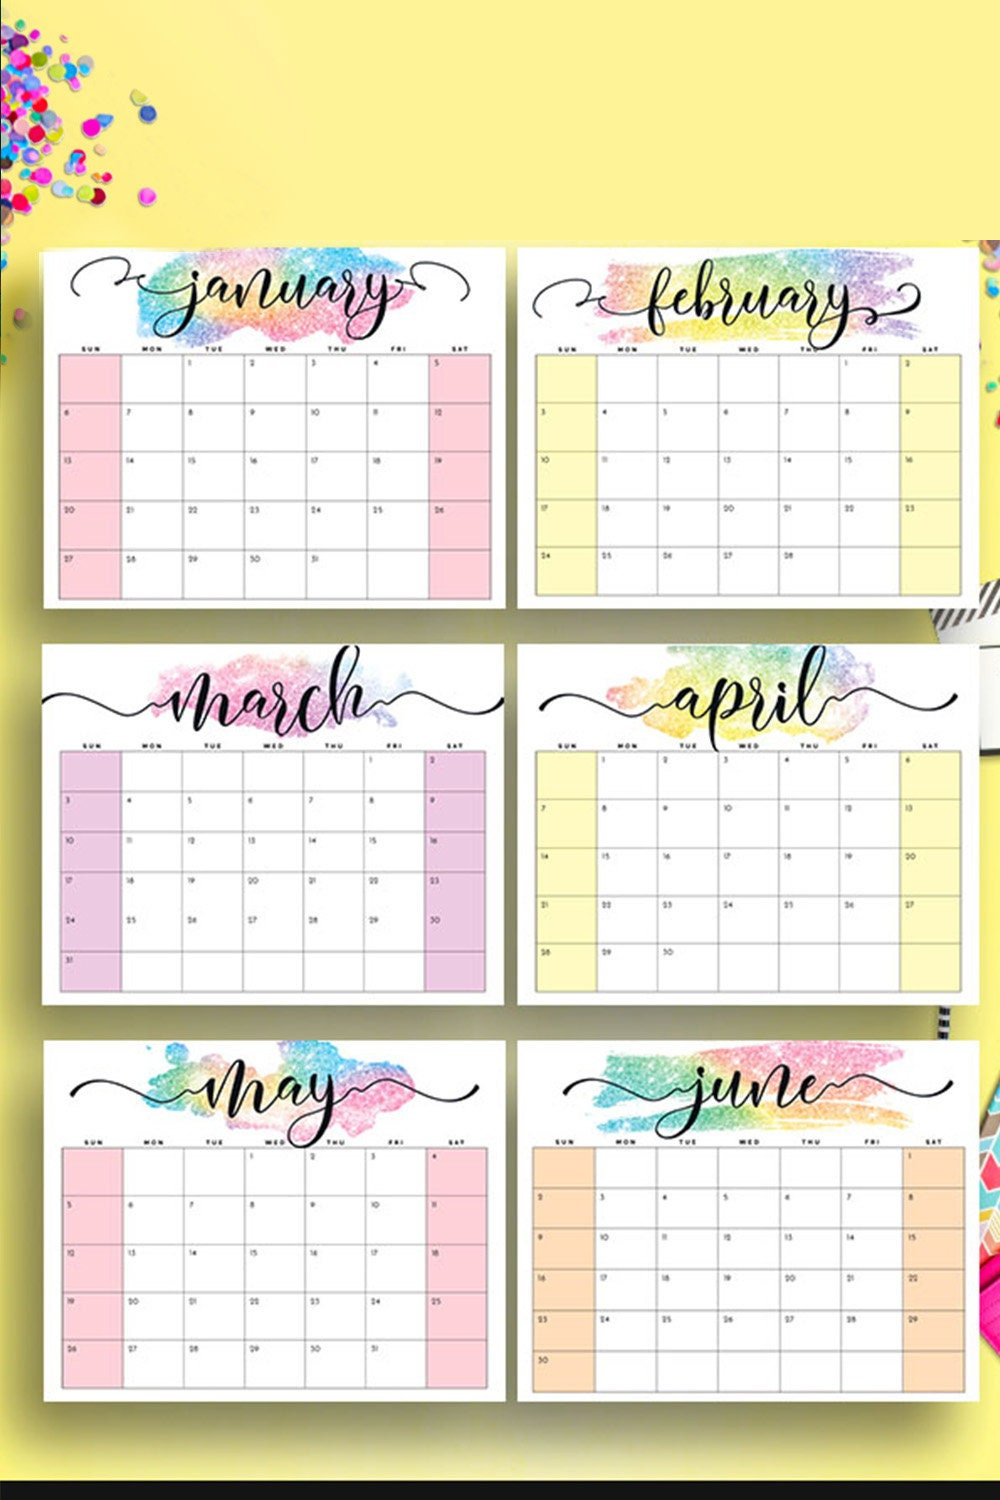 Desk Calendar 2021 Monthly Planner 2020-2021 Printable | Etsy Free Printable Desk Calendar